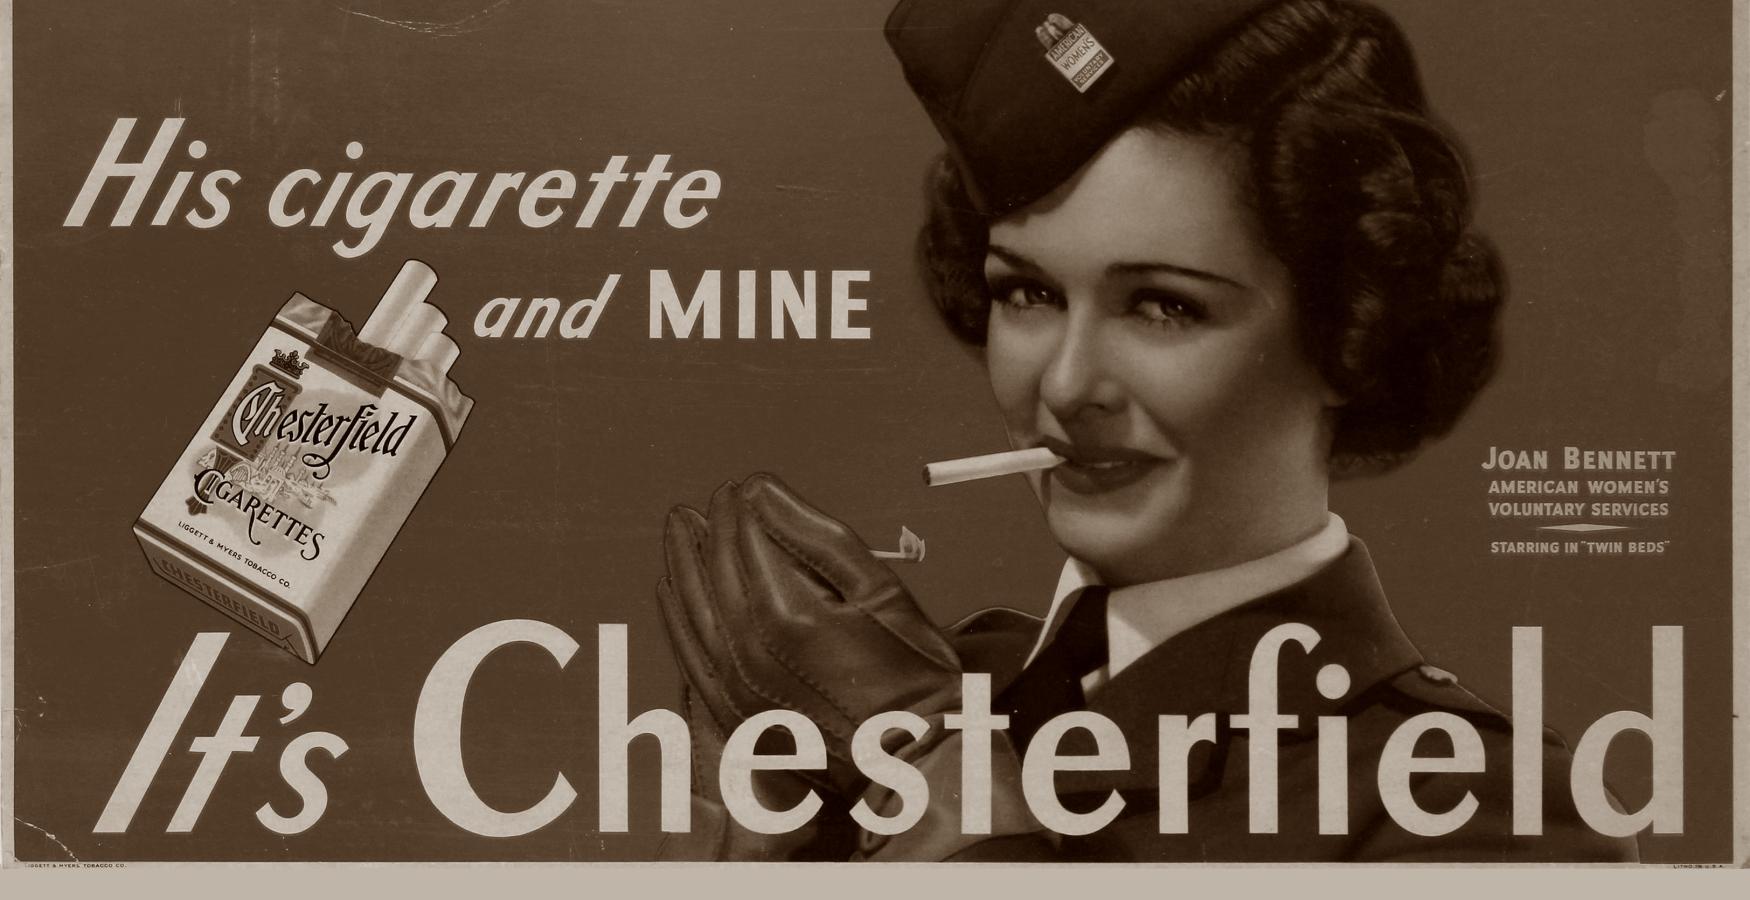 Vintage Chesterfield cigarette advertisement